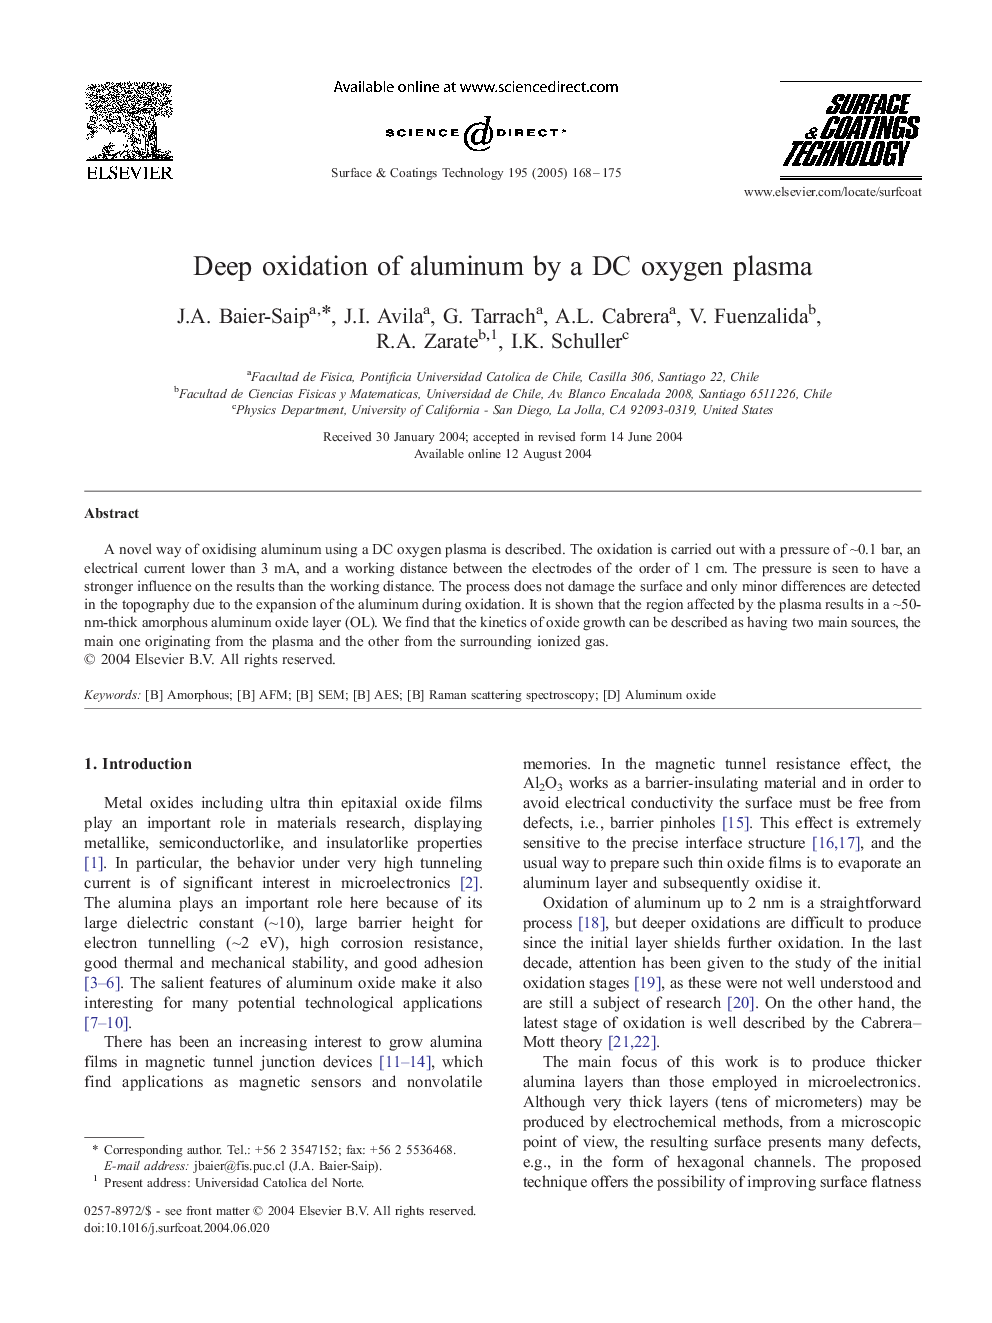 Deep oxidation of aluminum by a DC oxygen plasma